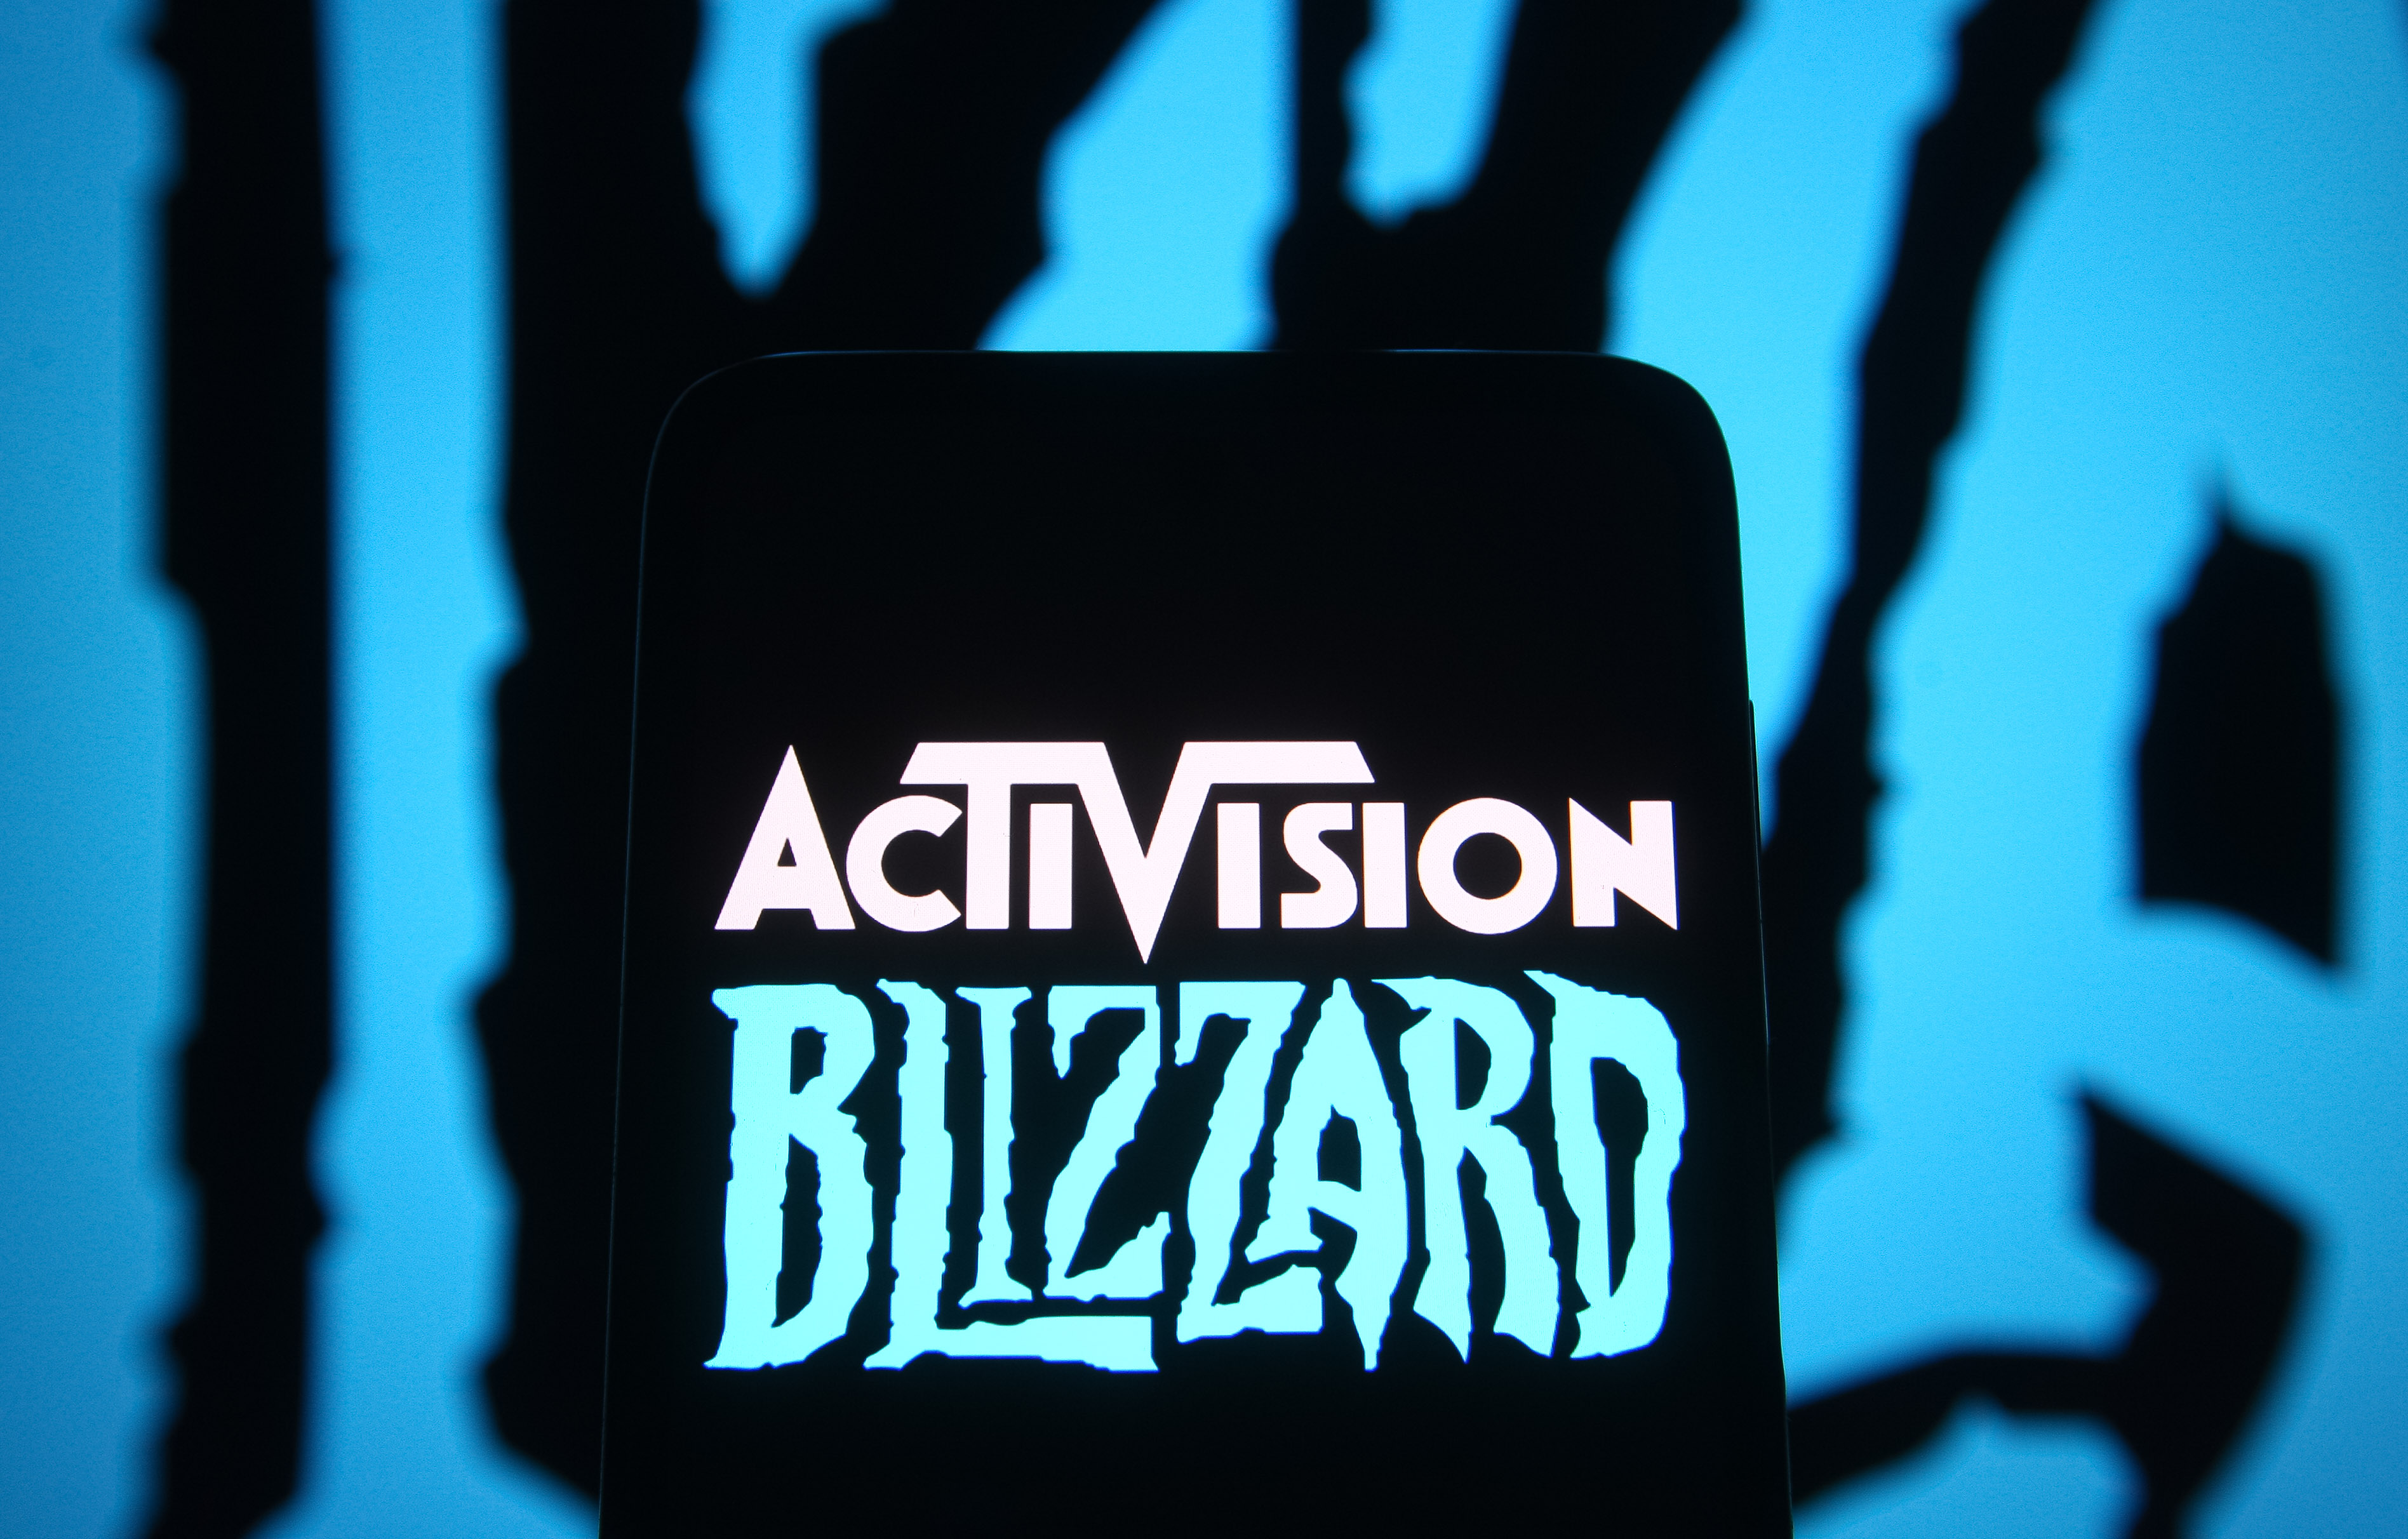 An Activision Blizzard logo on a phone